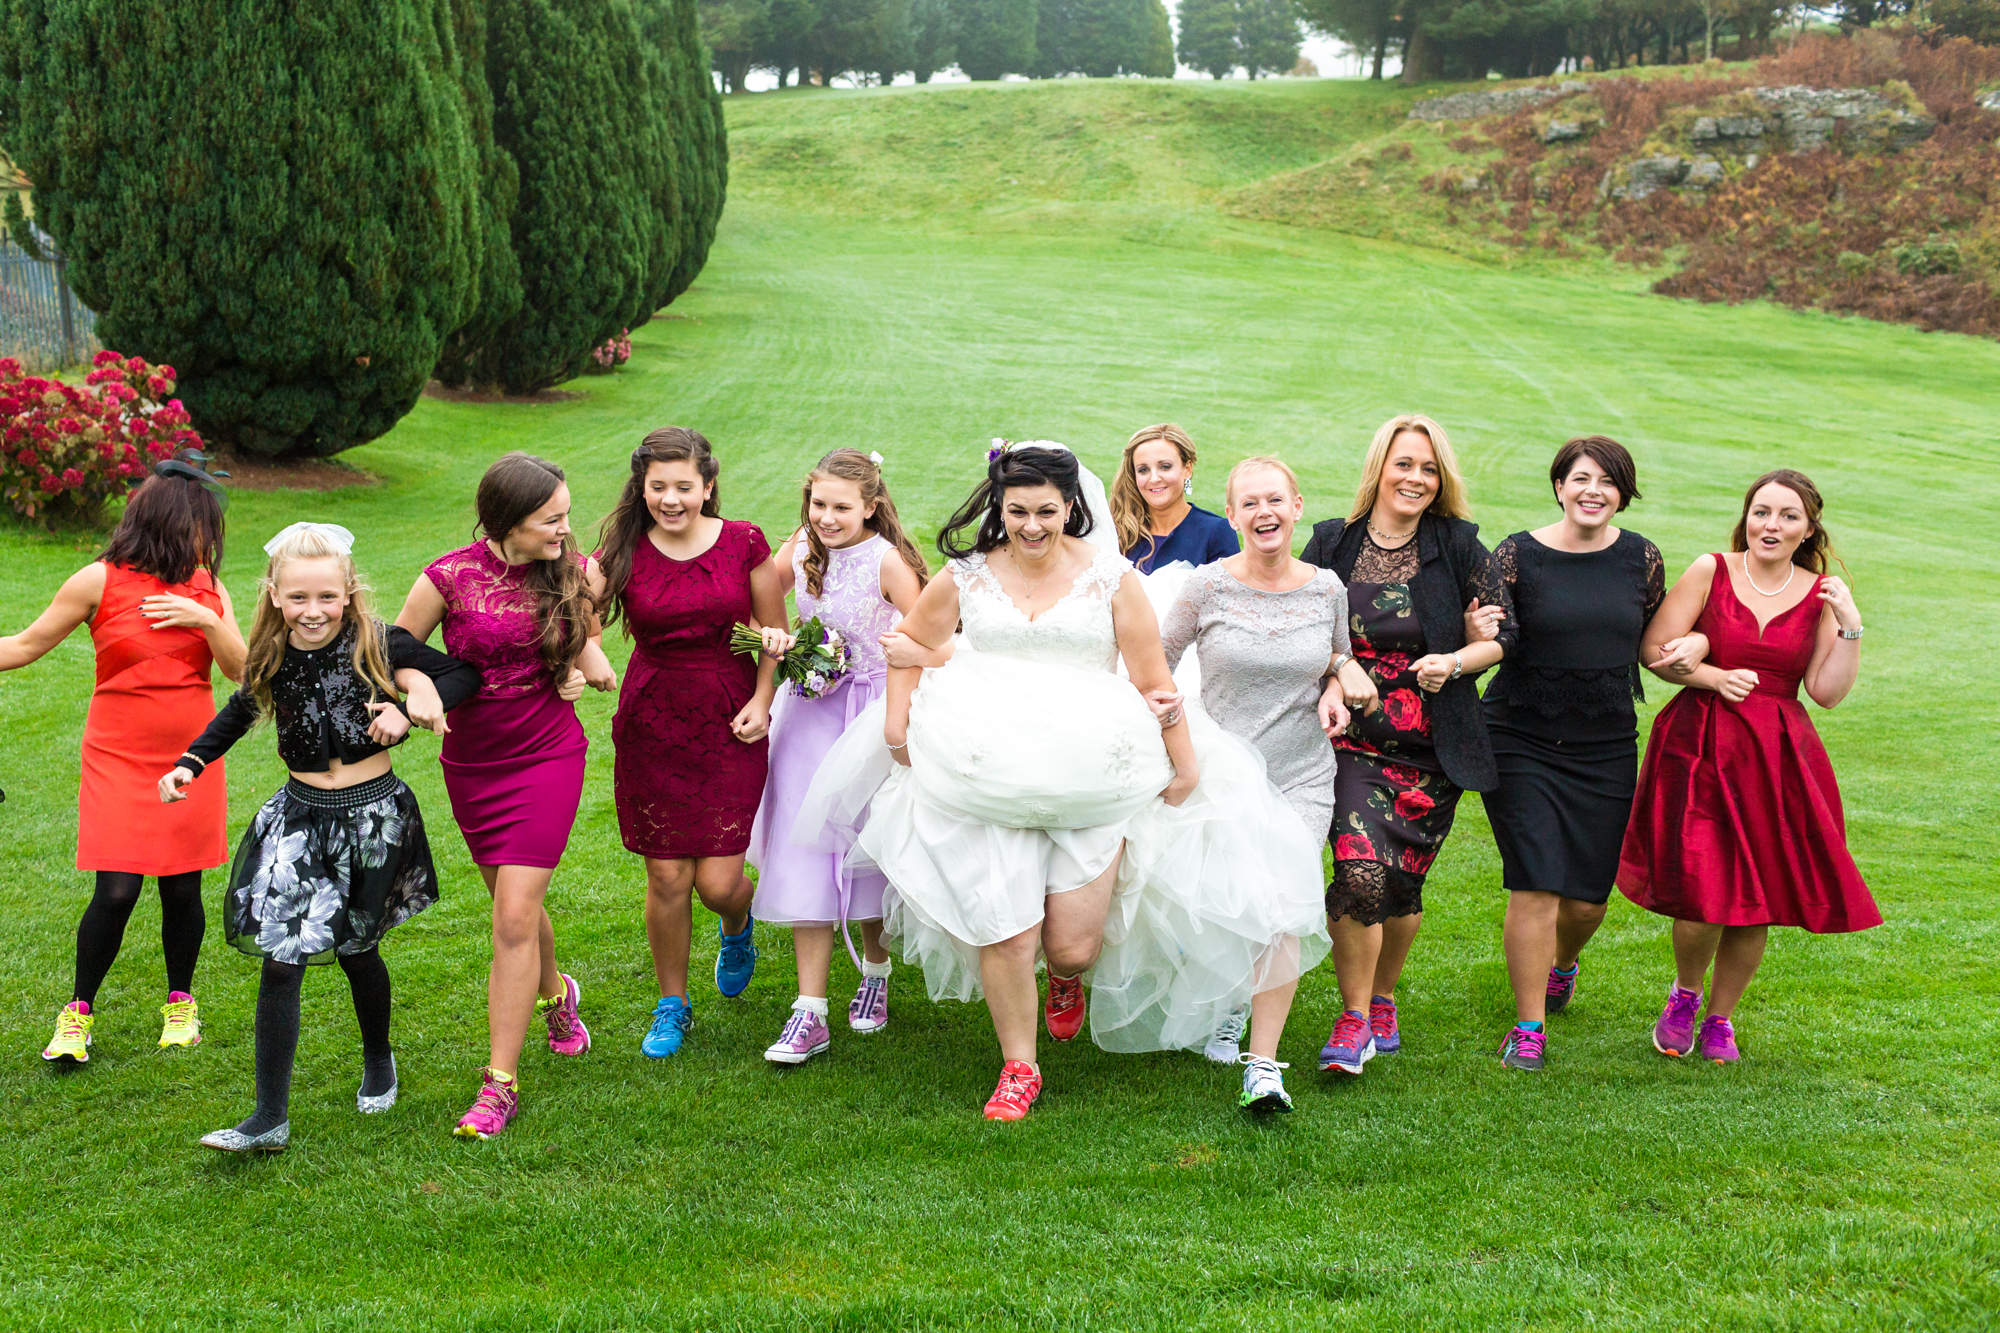 Pontypridd golf club wedding photographer. All the girls